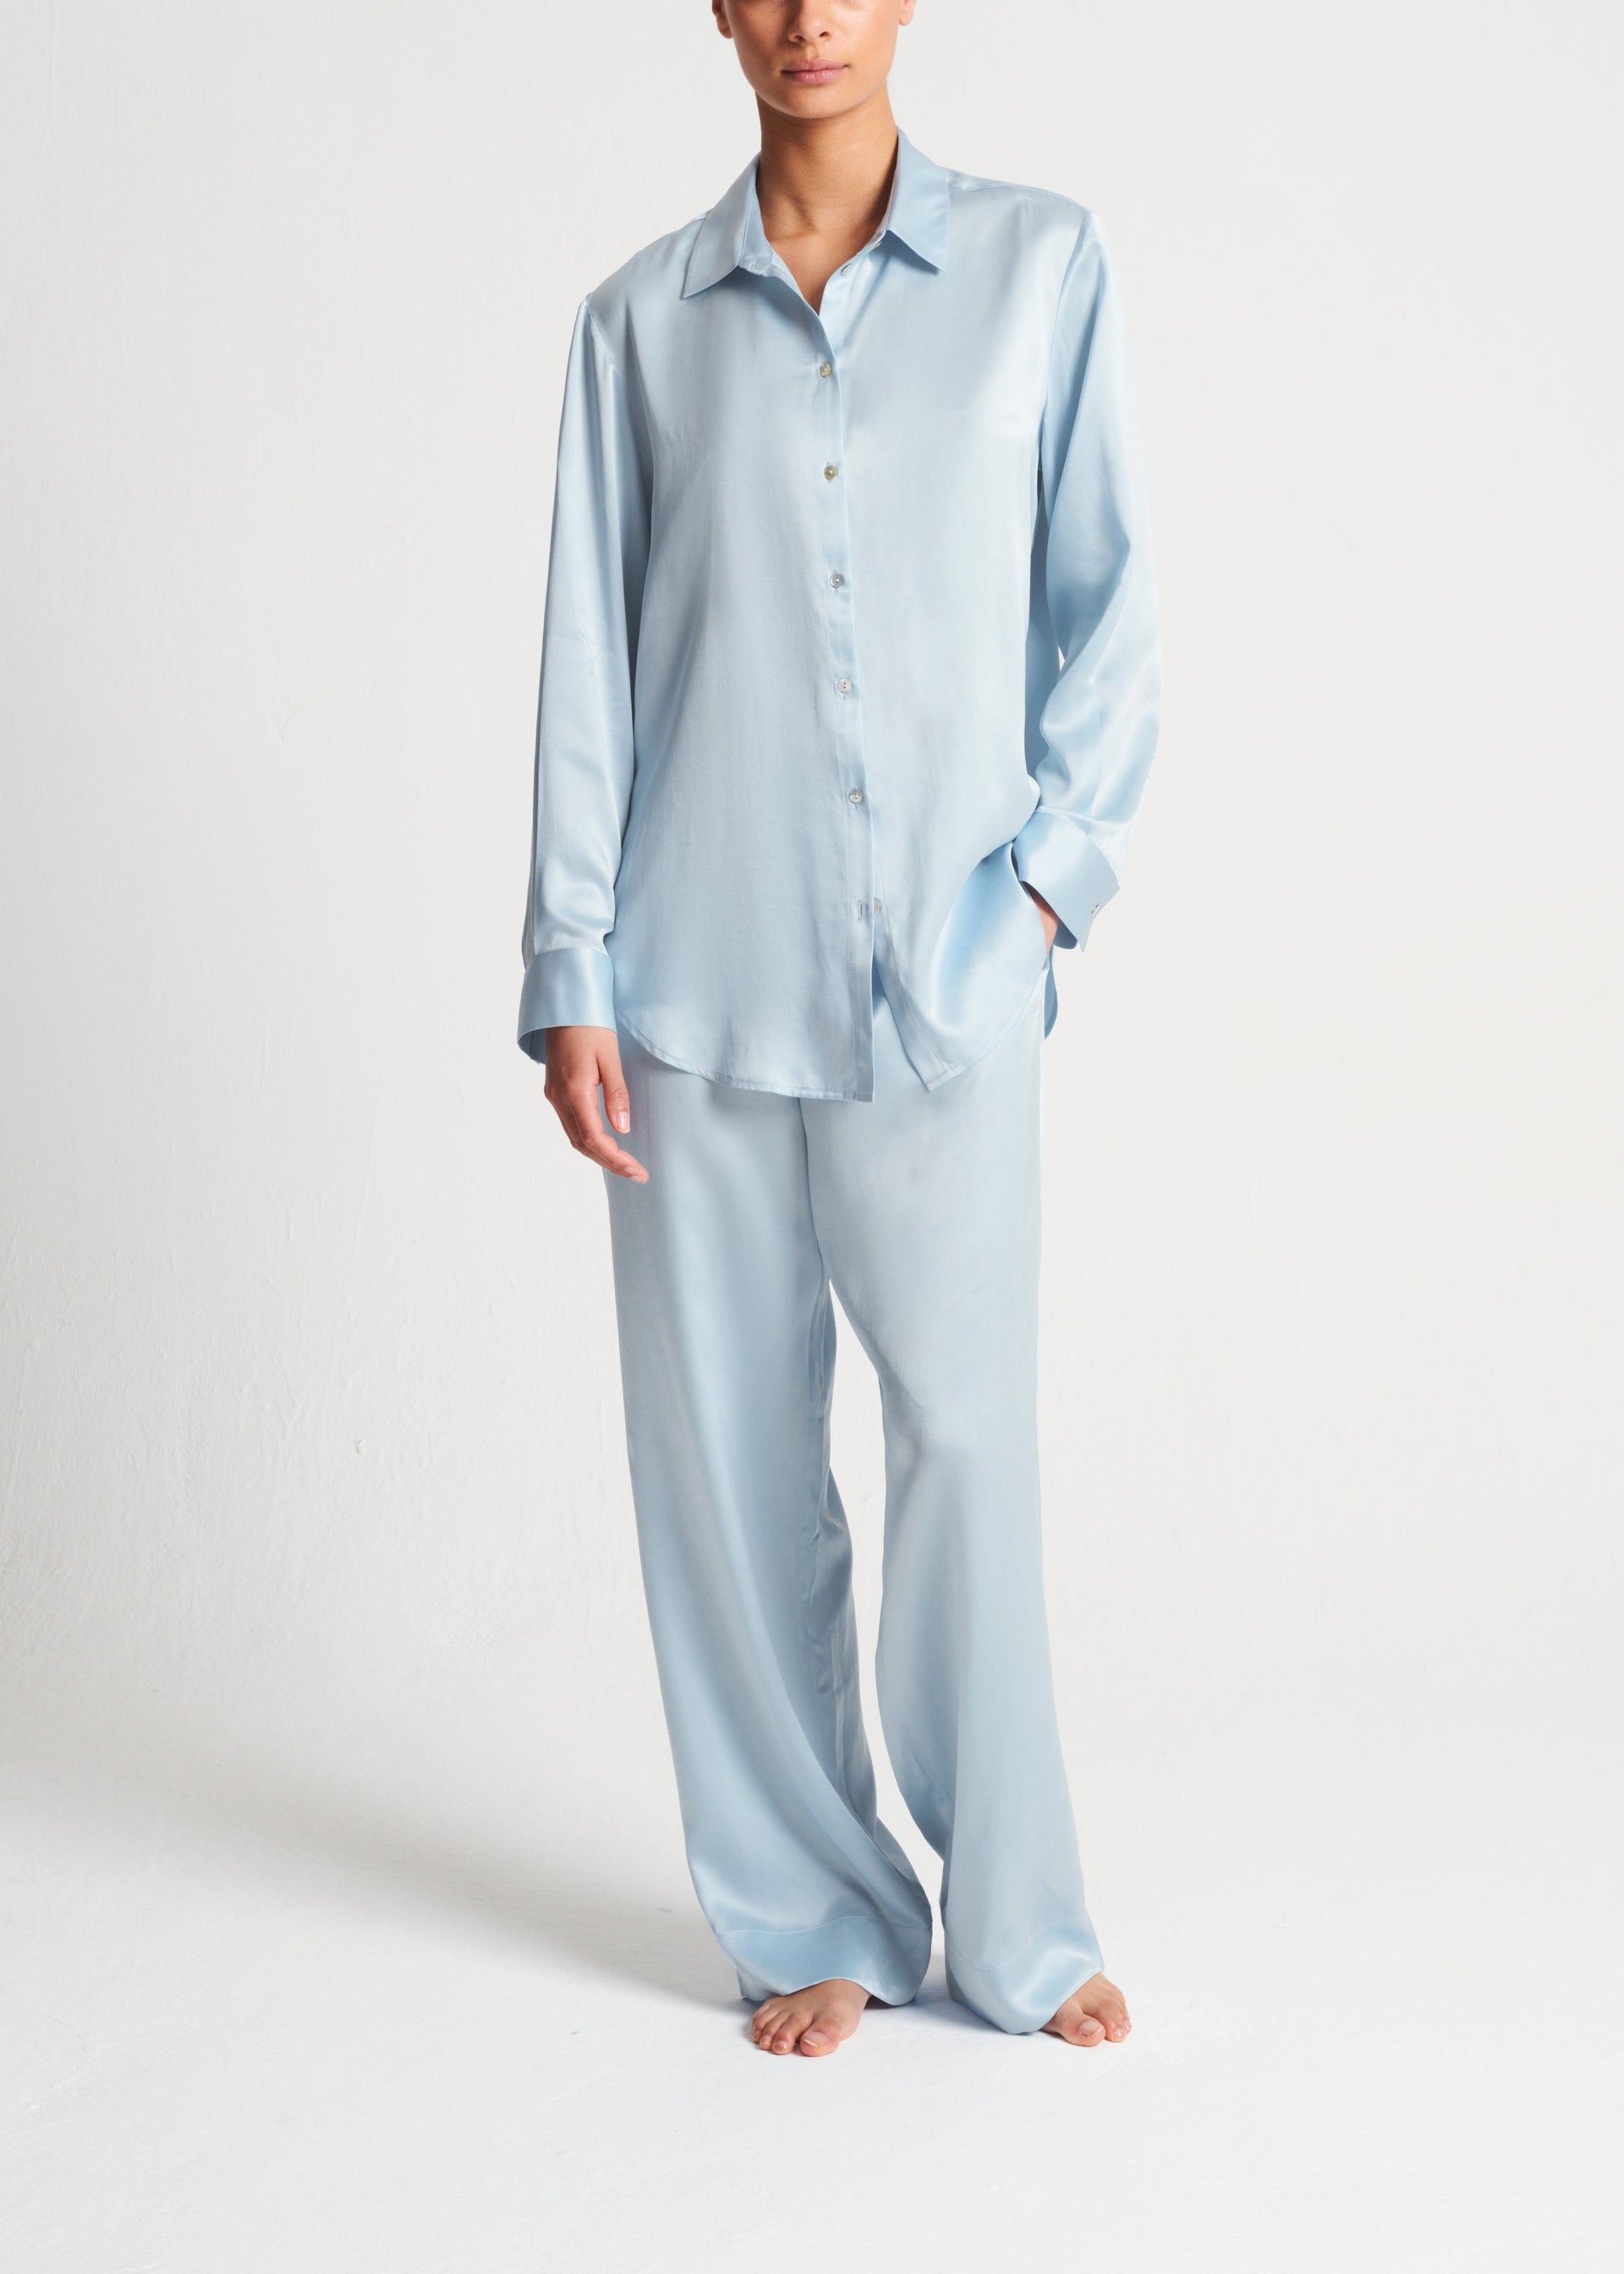 London Sky Blue Silk Charmeuse Pyjama Top